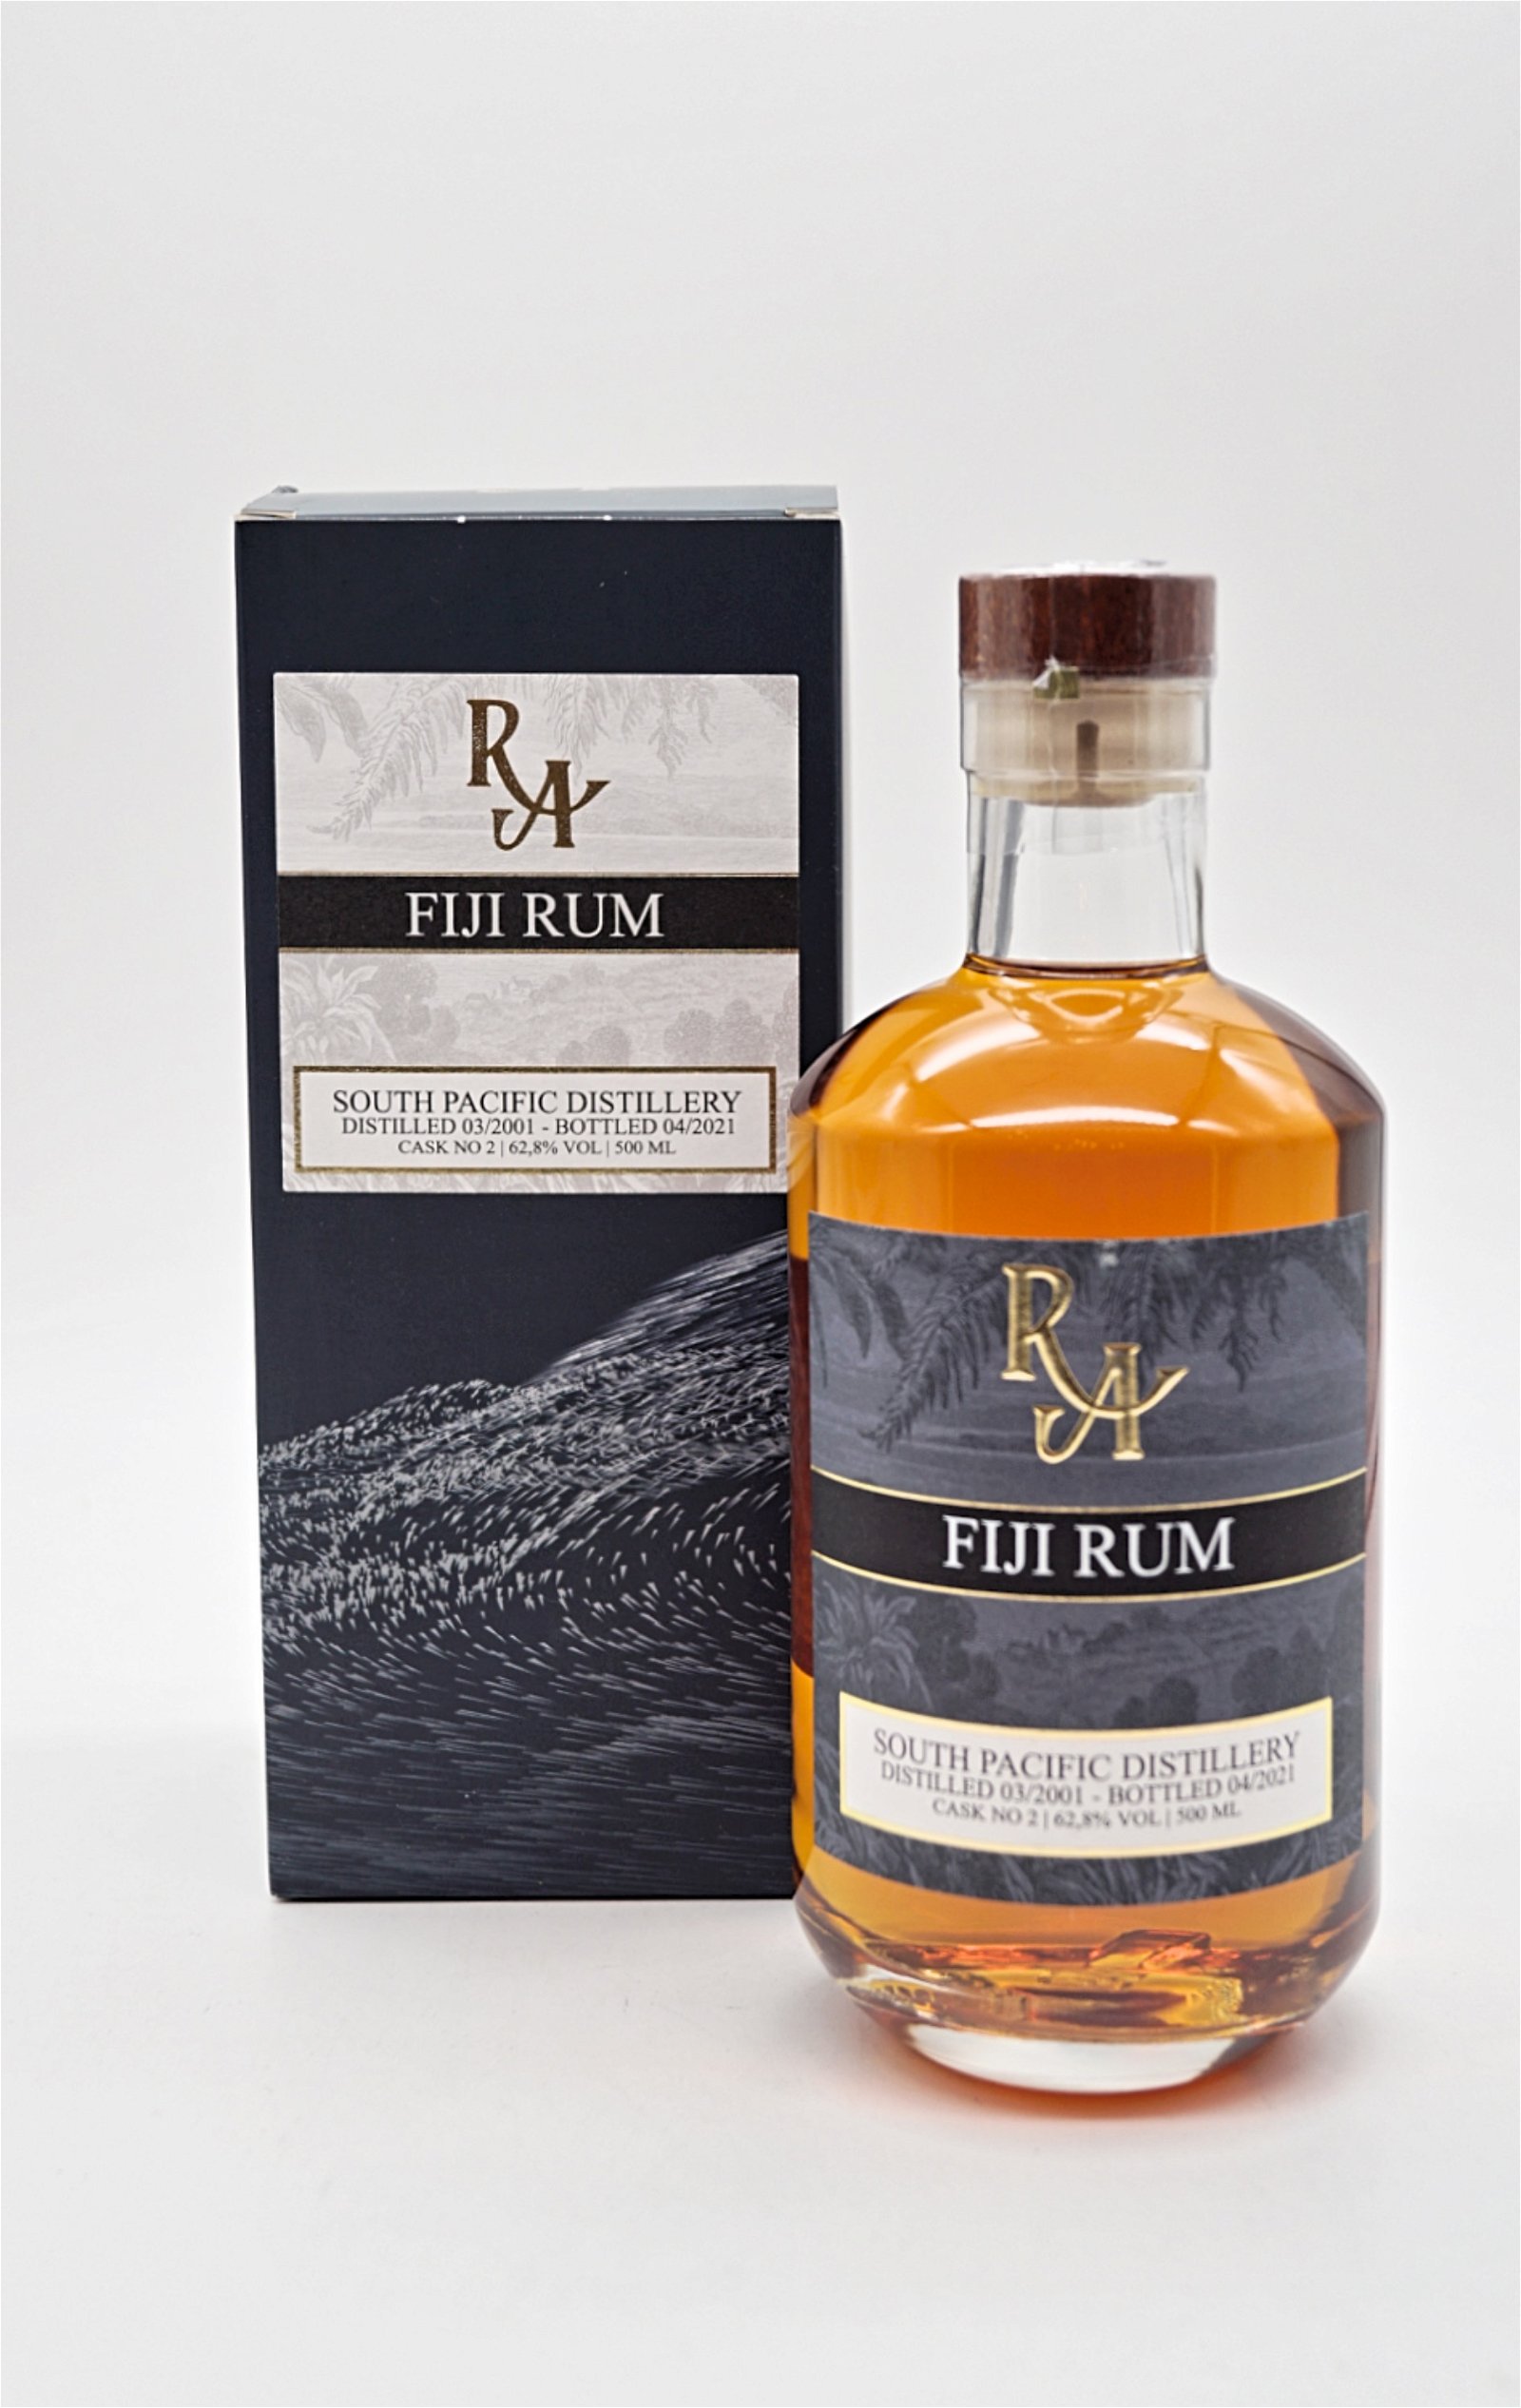 Rum Artesanal South Pacific Distillery 2001/2021 Cask #2 Fiji Rum